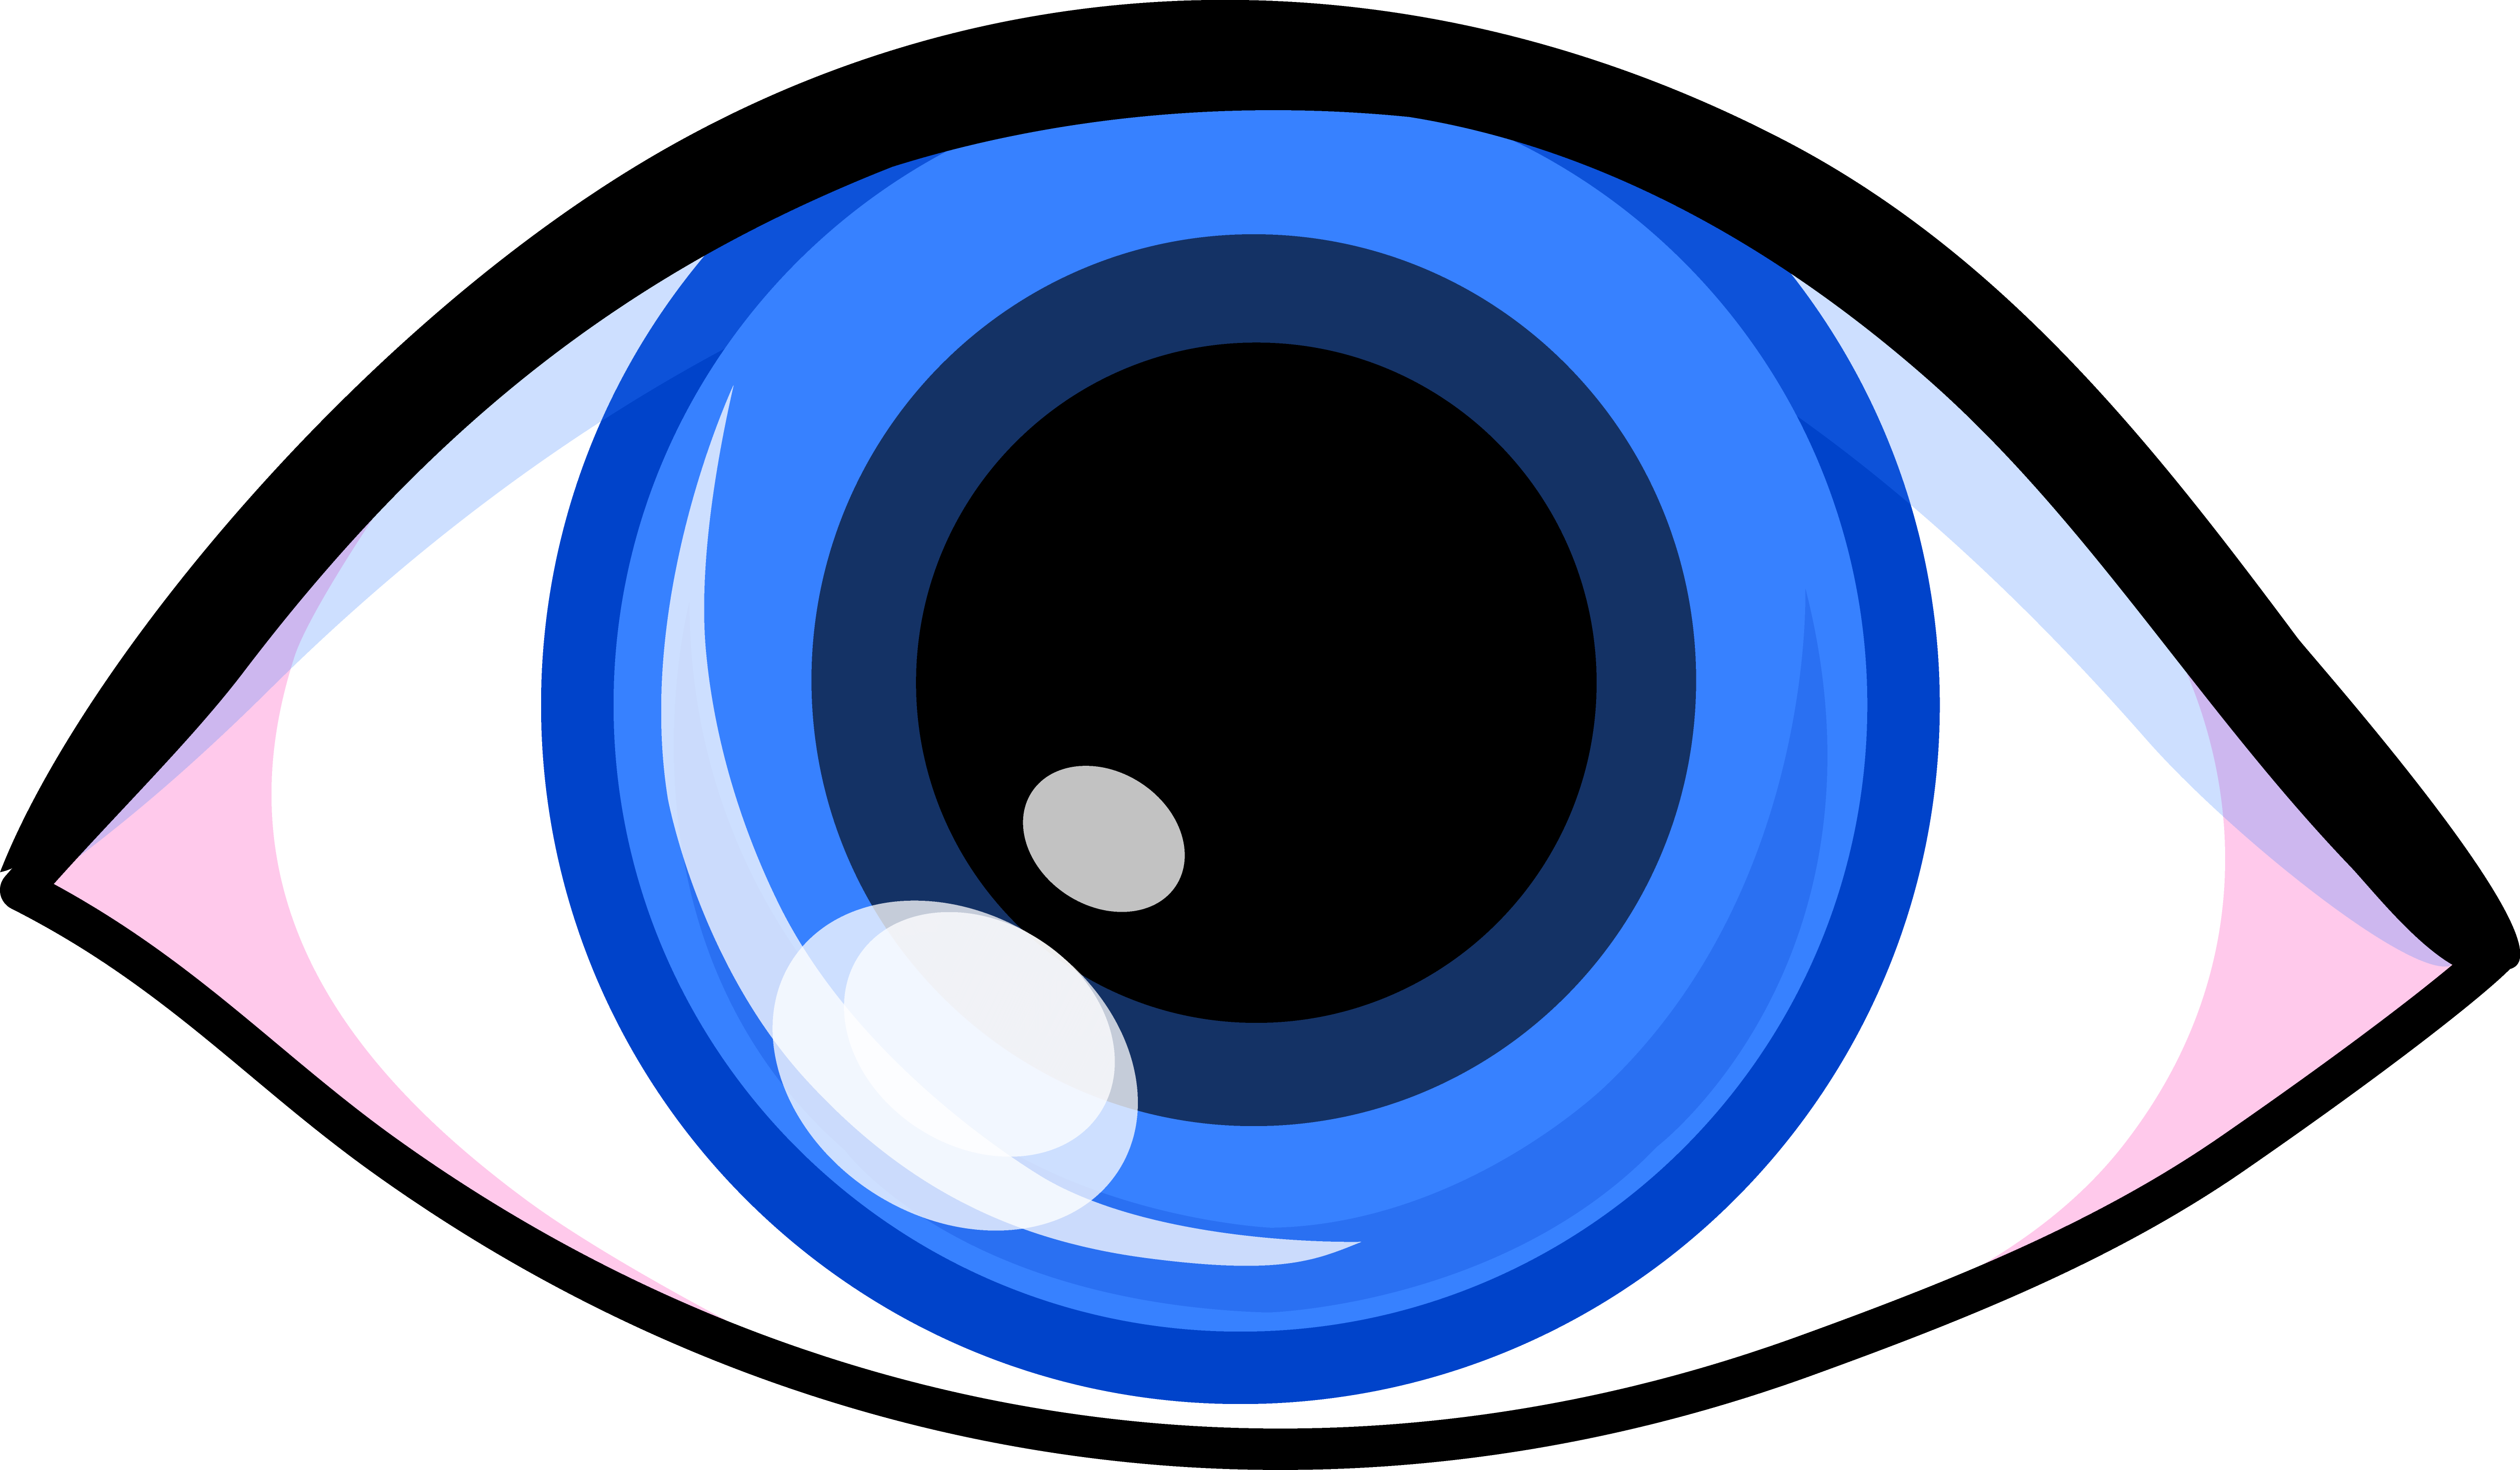 A Blue Eye With White Circles